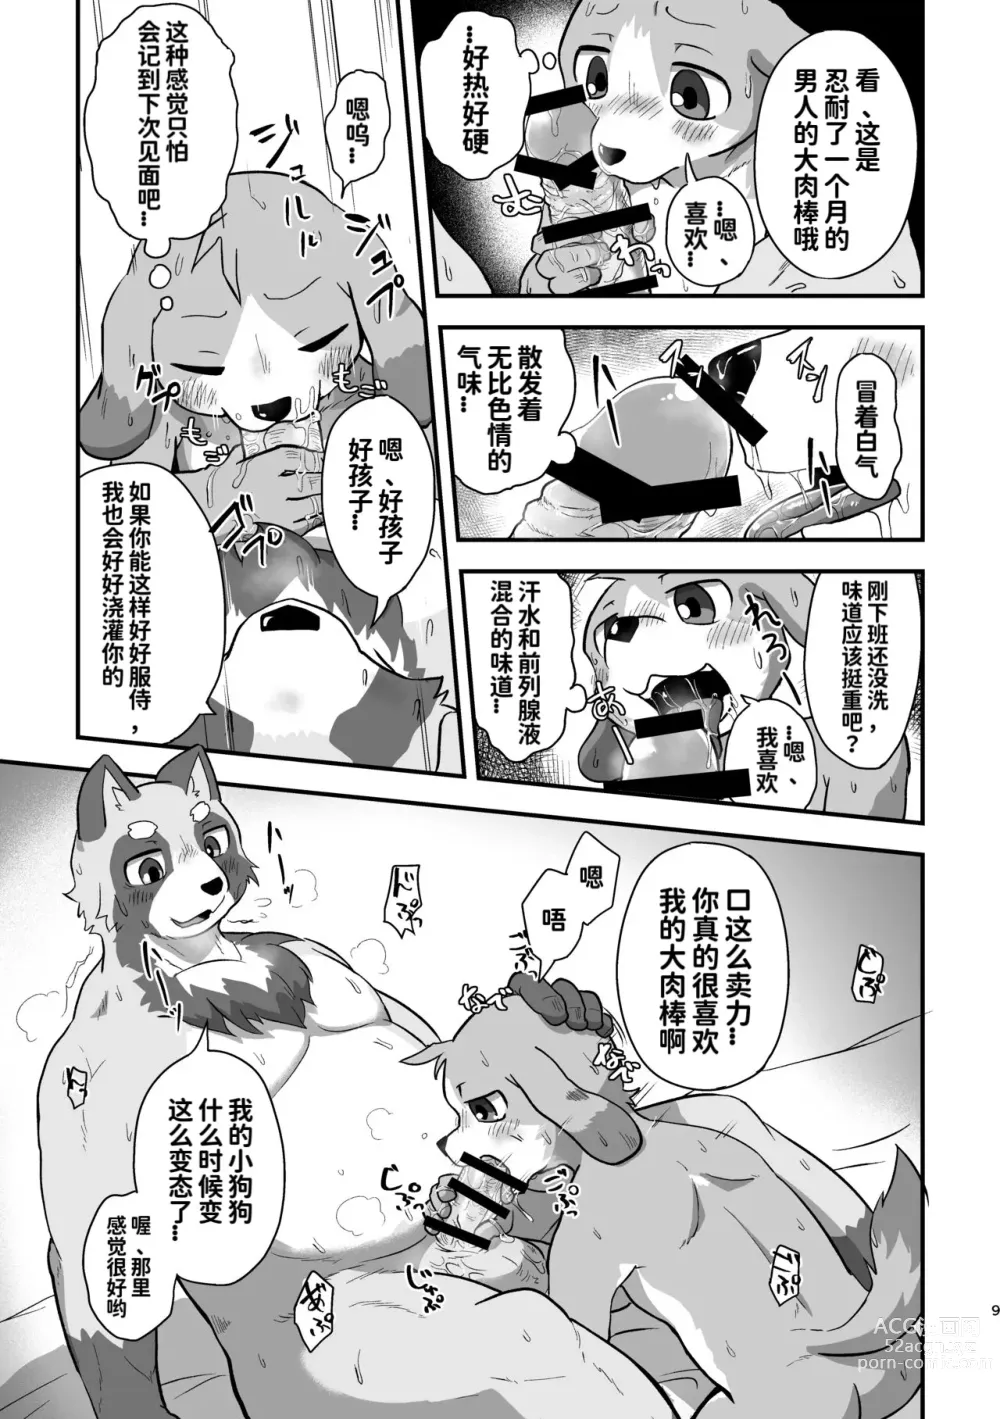 Page 8 of doujinshi 黑夜终会破晓